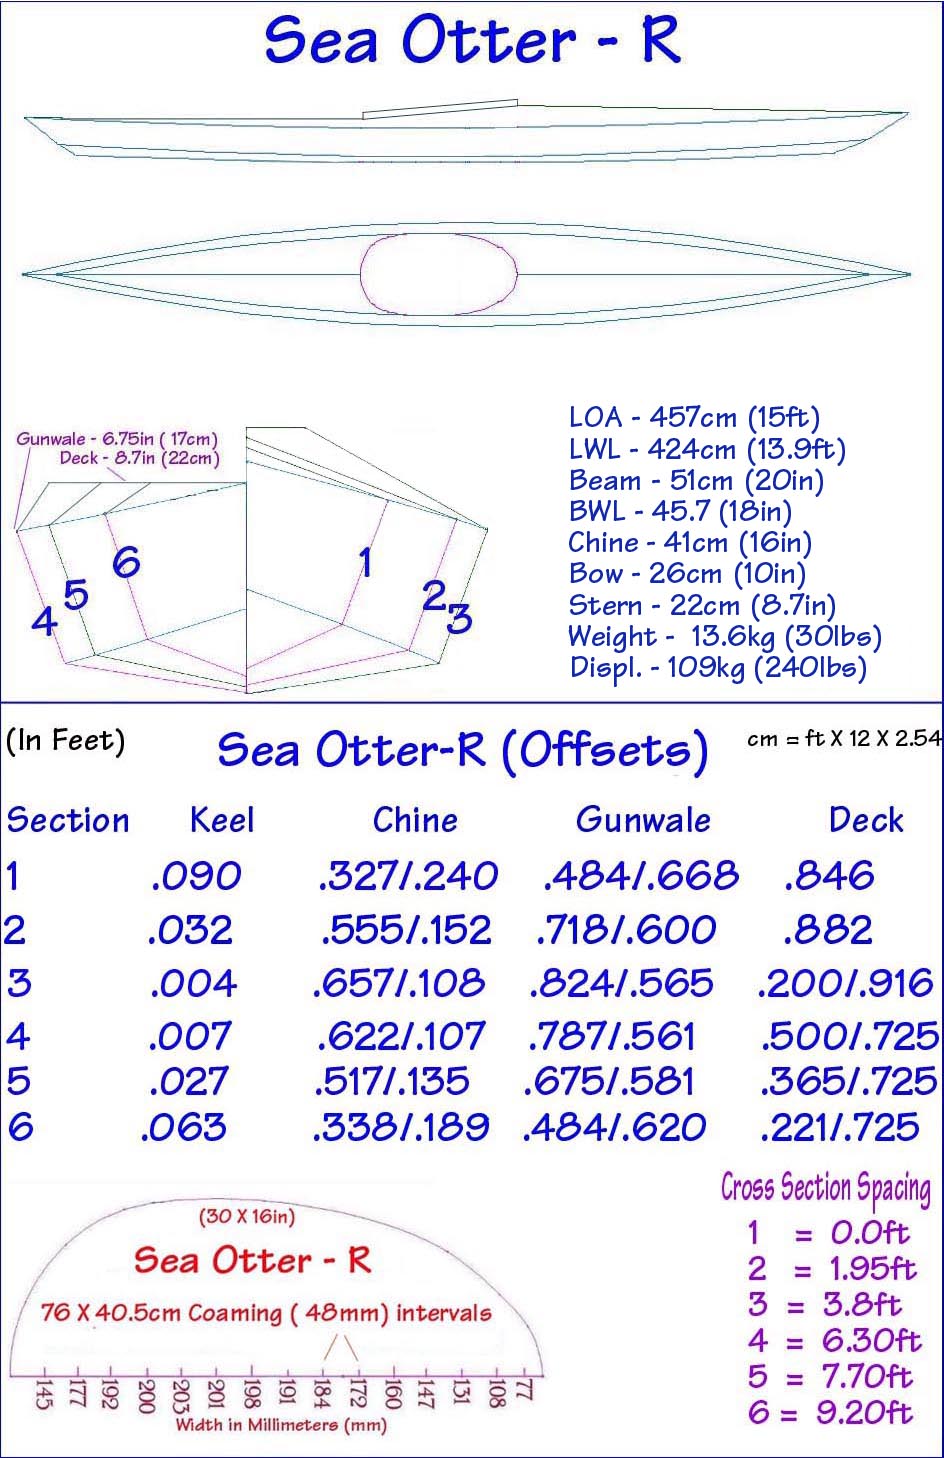 sea-otter-r-offsets-plans.jpg